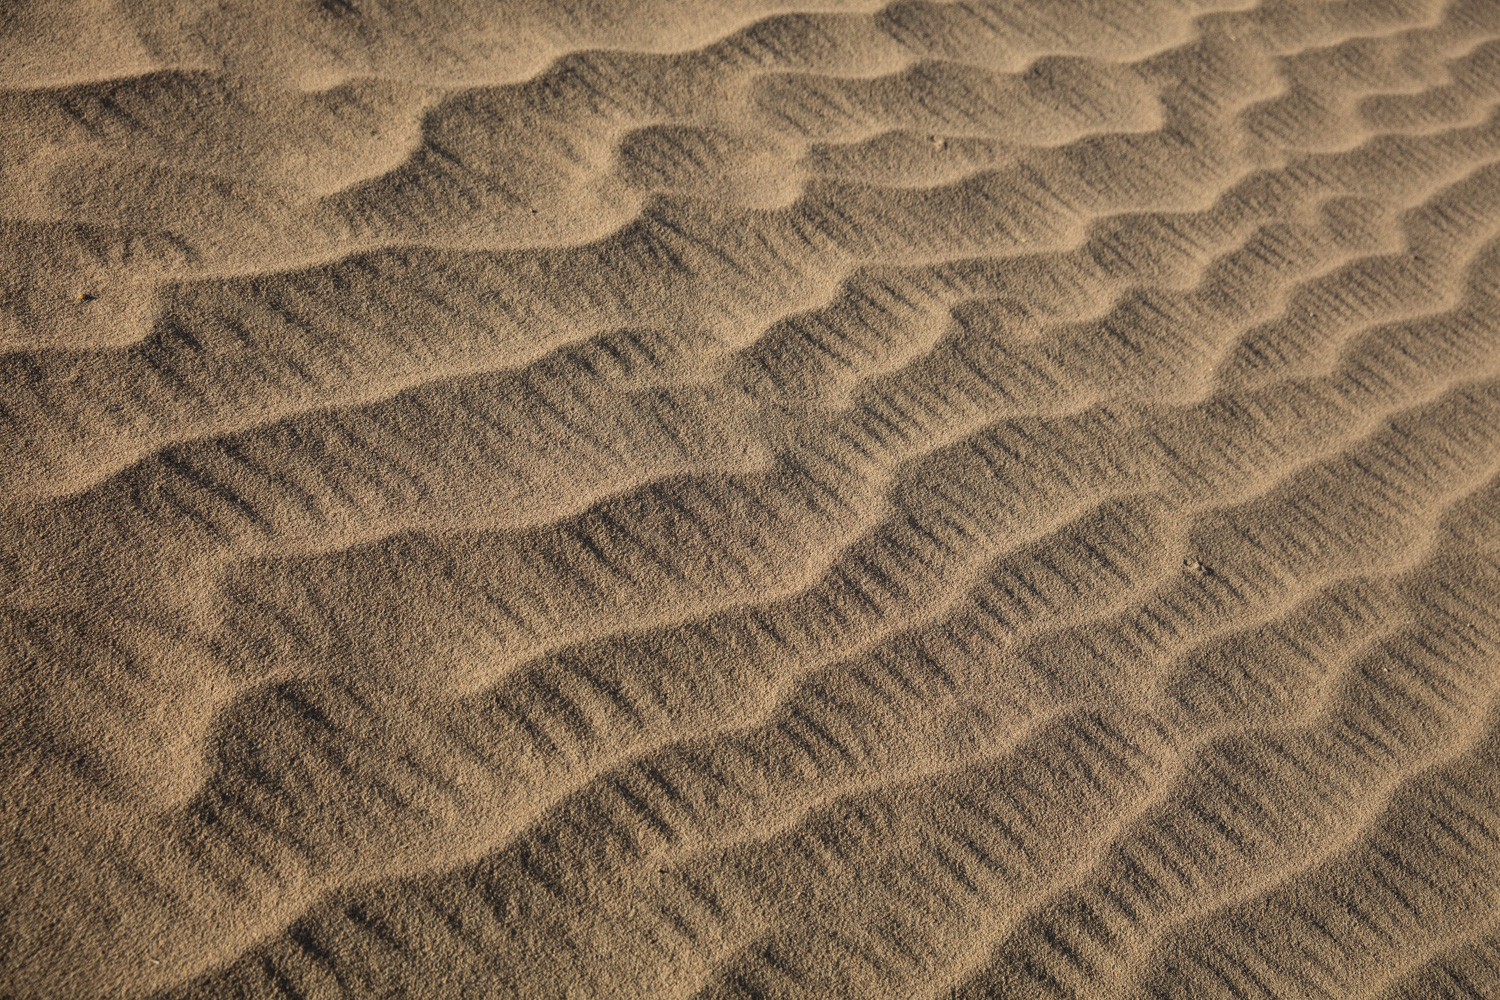  Sand Art | Death Valley, California 